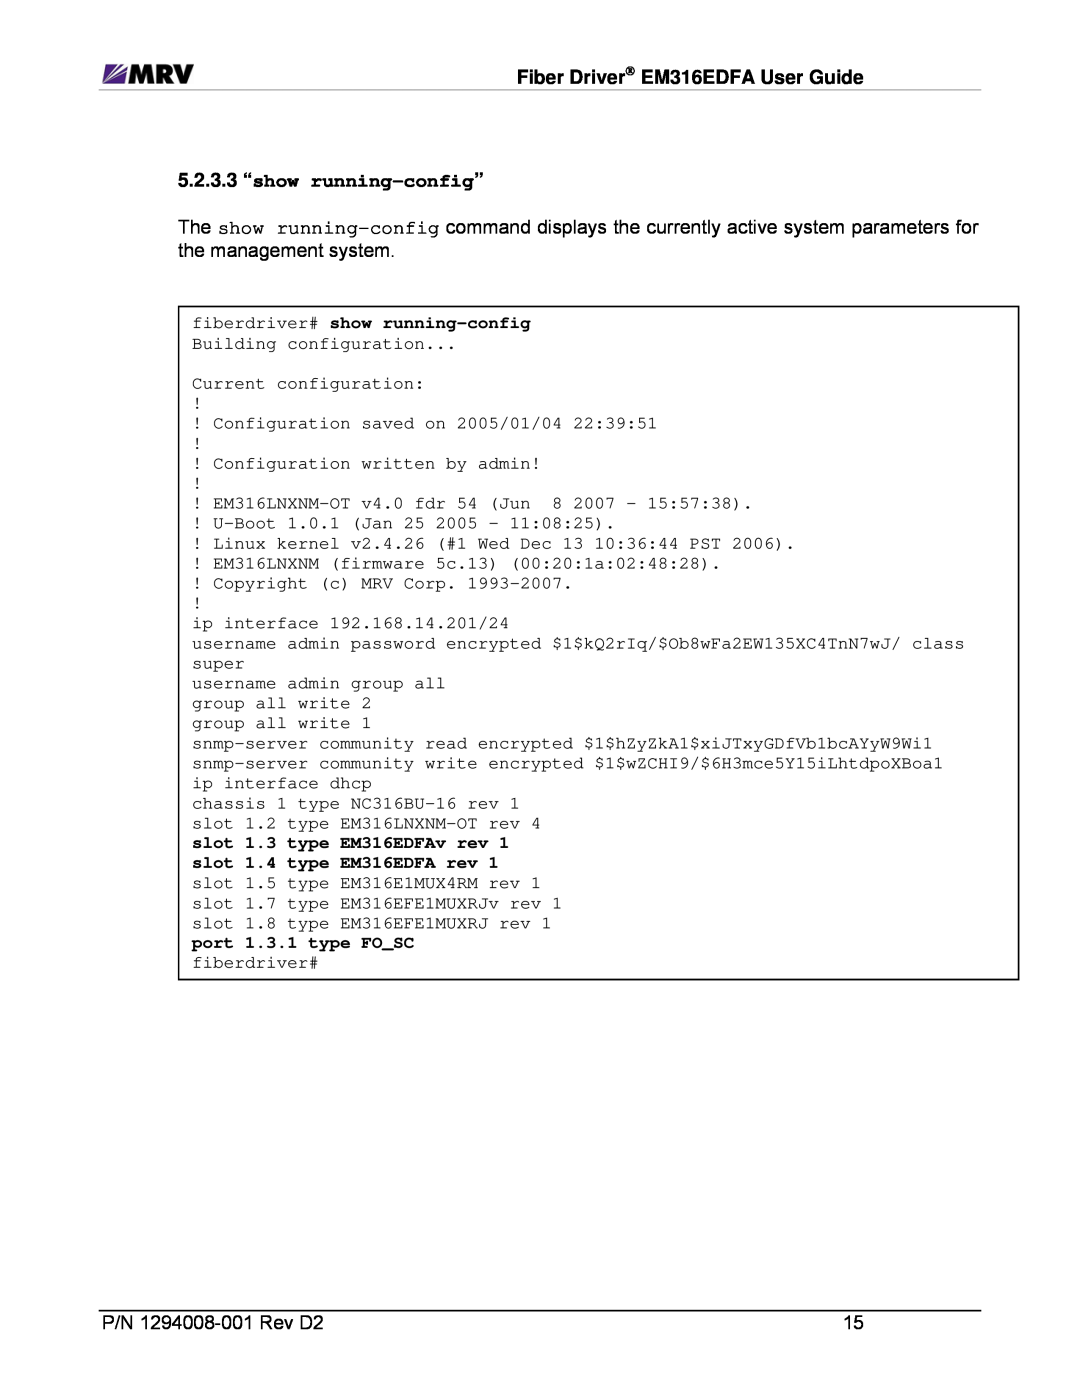 MRV Communications EM316EDFA-BR 5.2.3.3“show running-config”, P/N 1294008-001Rev D2, fiberdriver# show running-config 